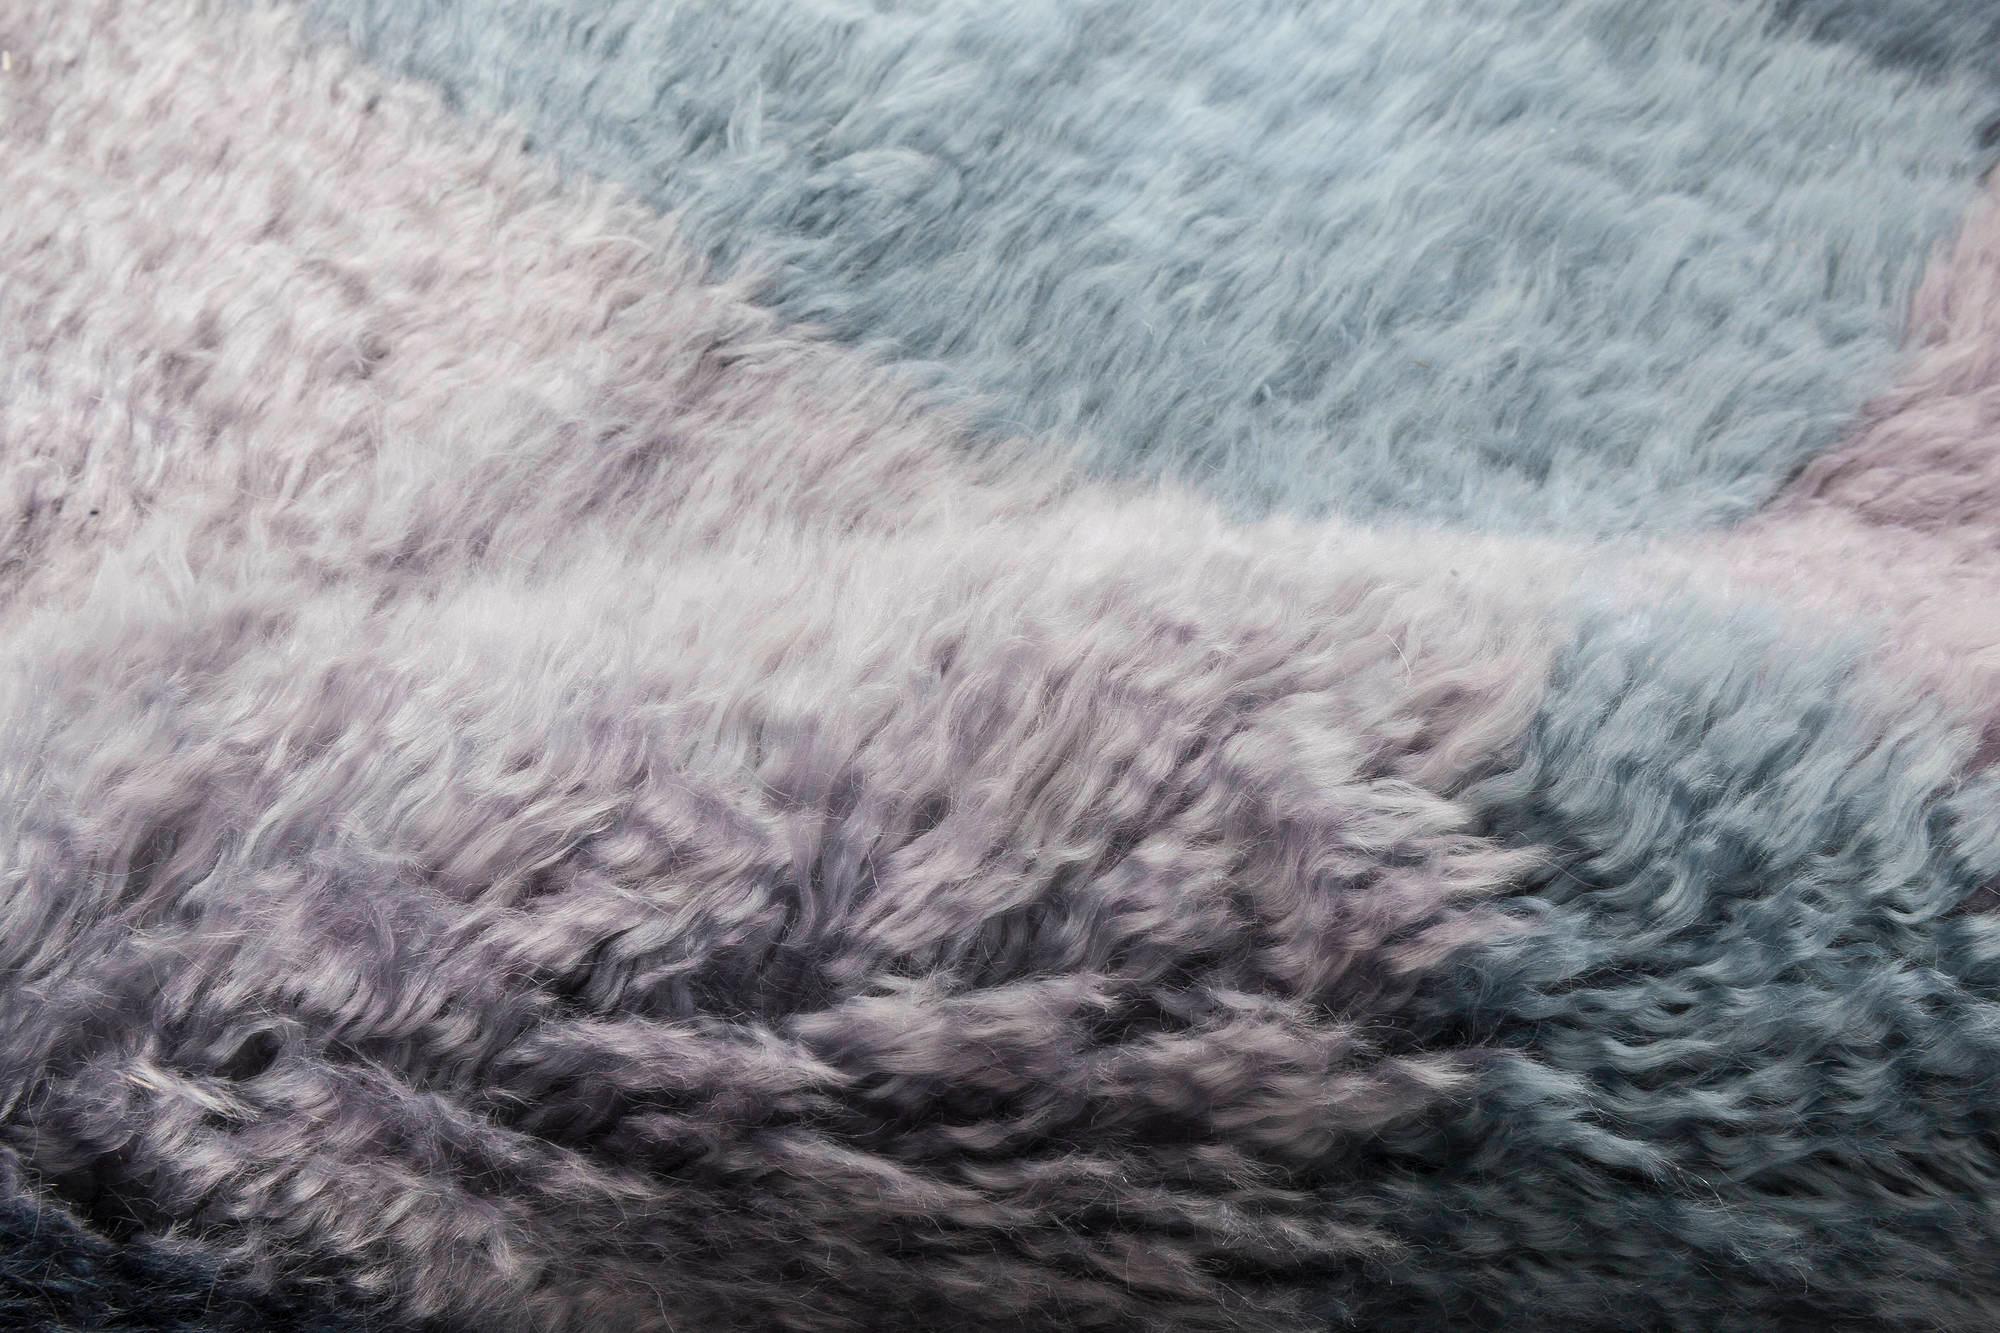 Contemporary bluebell Swedish Rya design rug by Doris Leslie Blau.
Size: 2'10